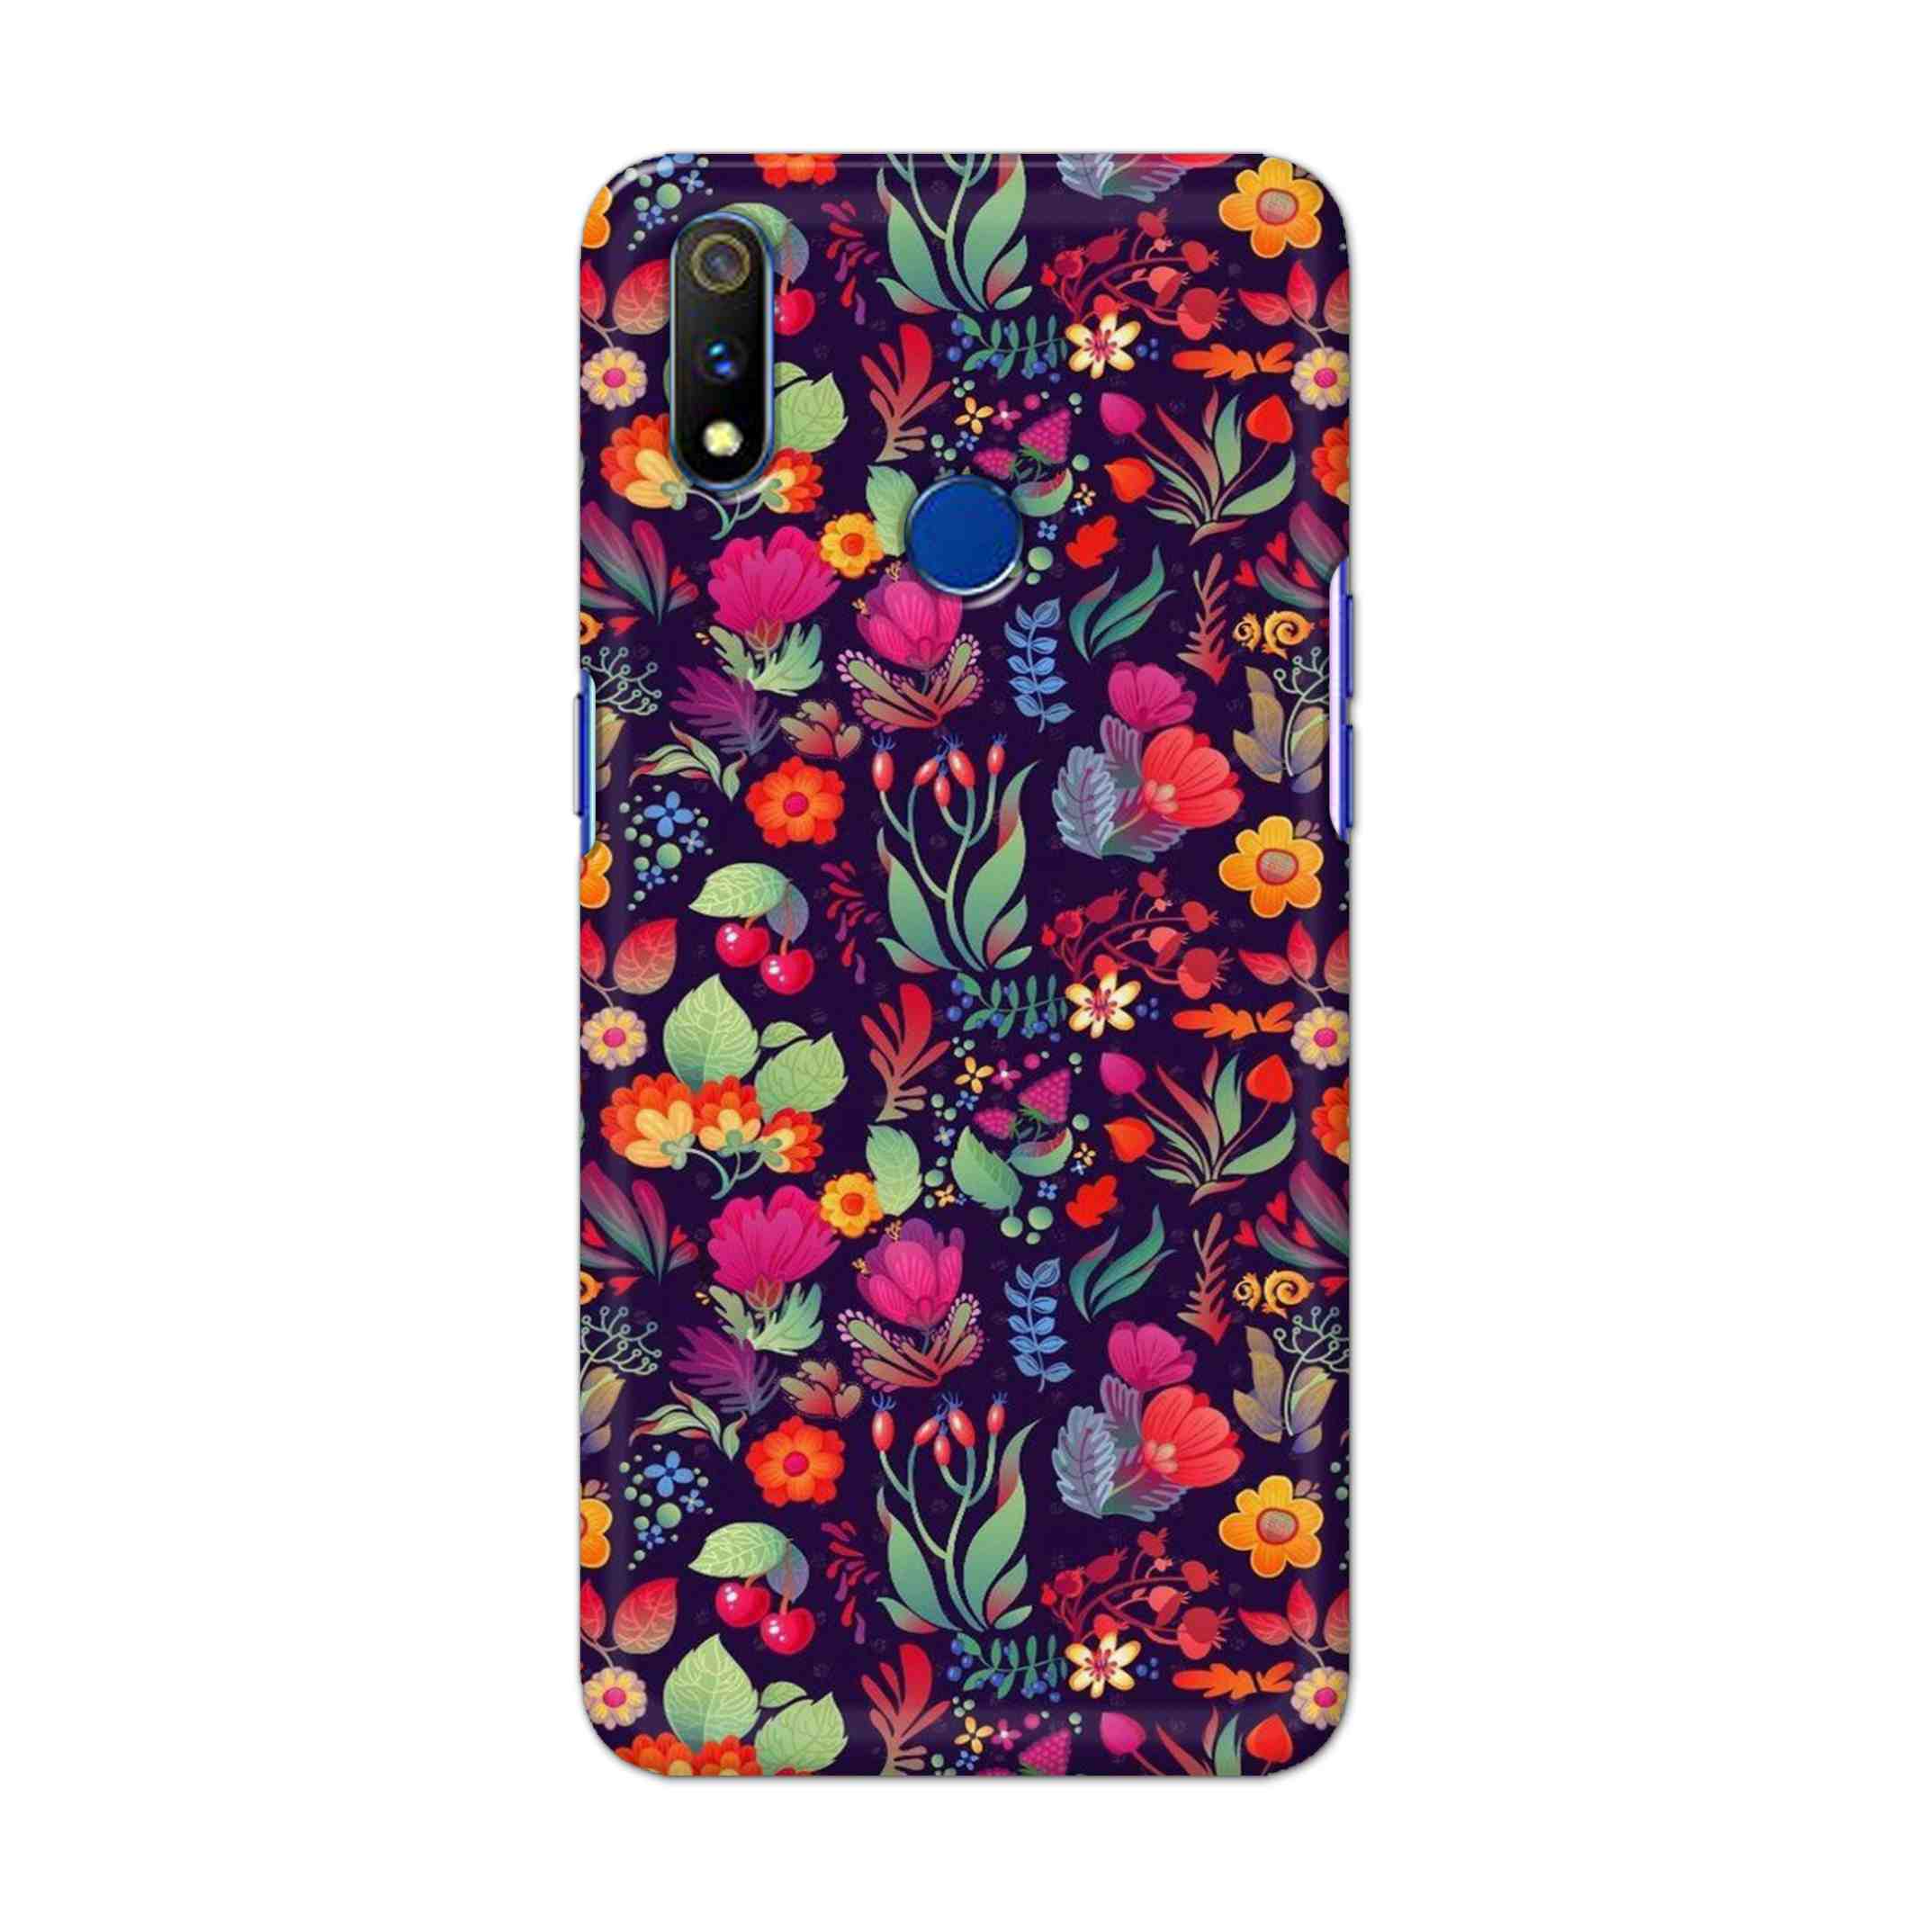 Buy Fruits Flower Hard Back Mobile Phone Case Cover For Realme 3 Pro Online